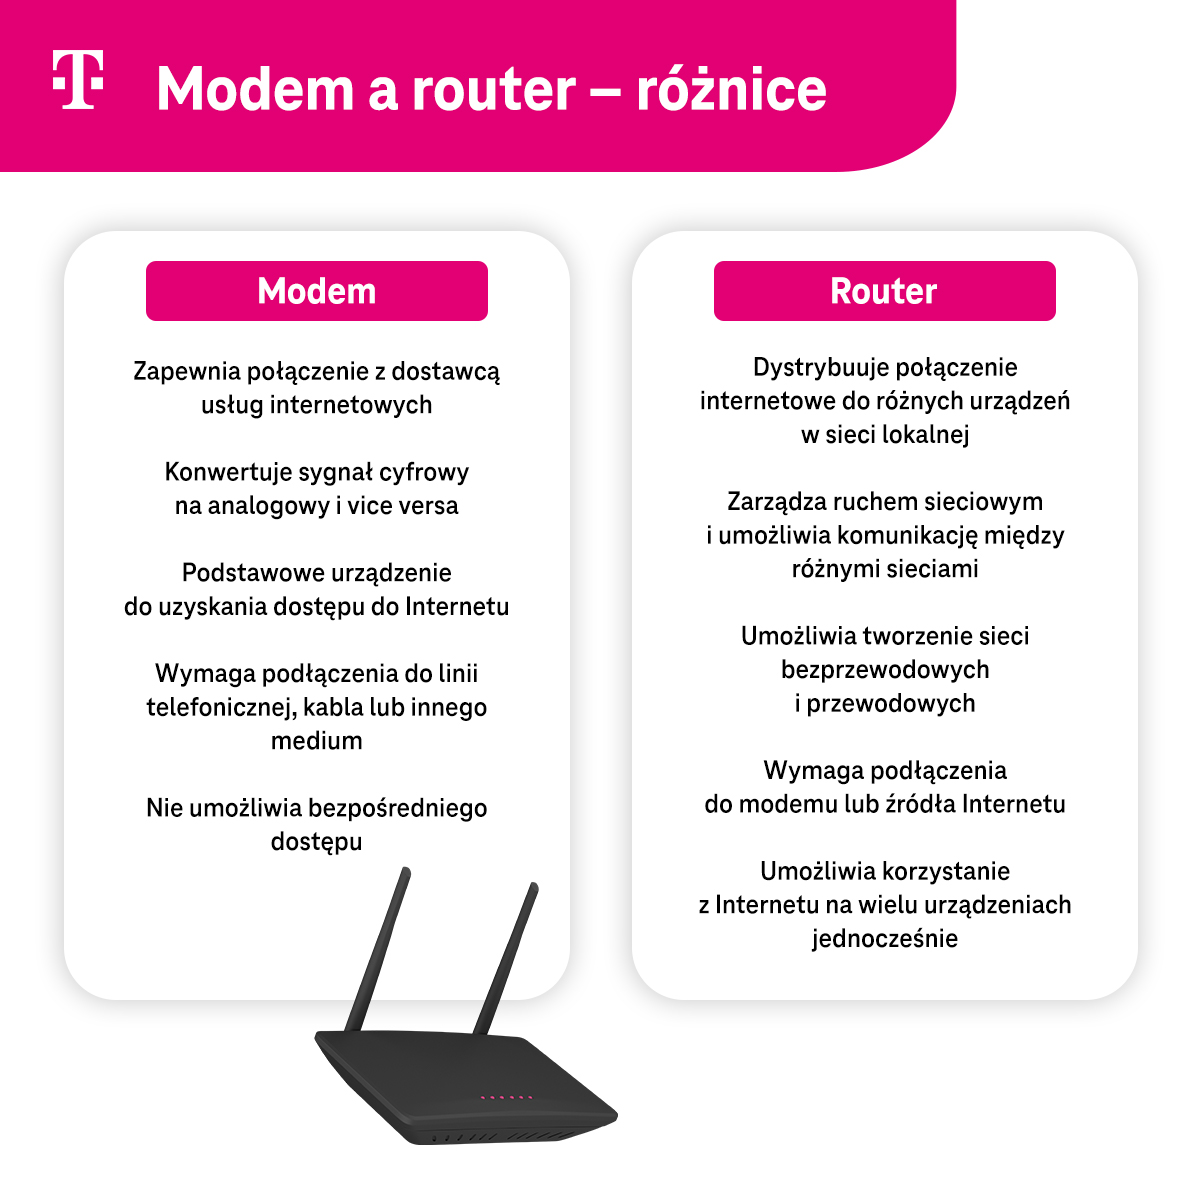 Modem a router - różnice - tabela - infografika